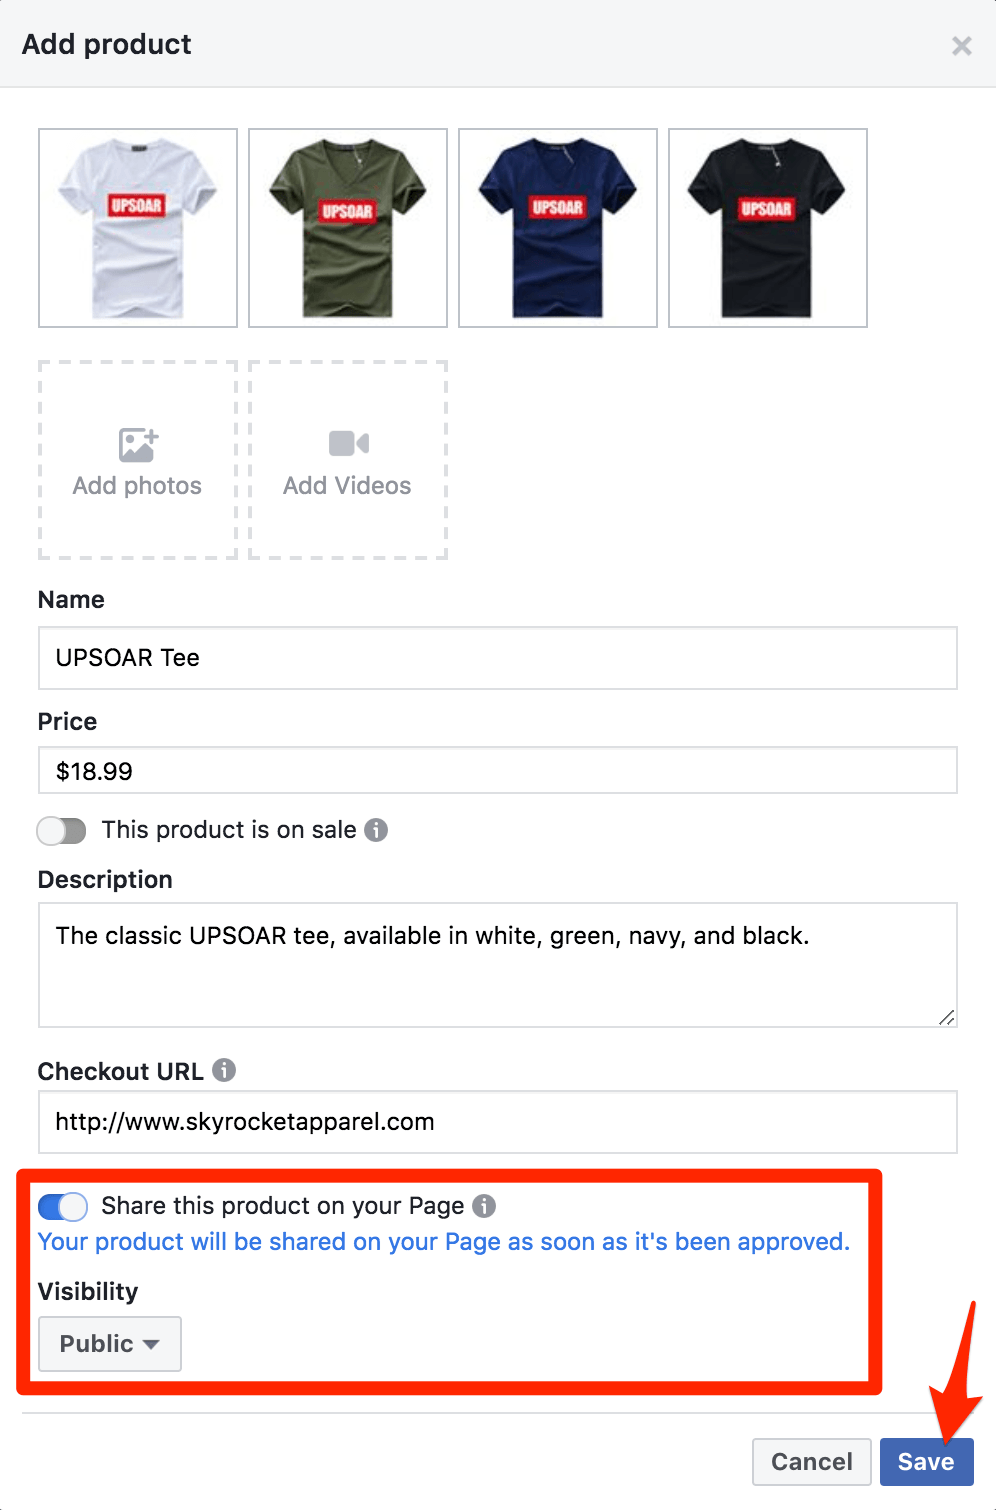 Botiga de Facebook Afegeix producte